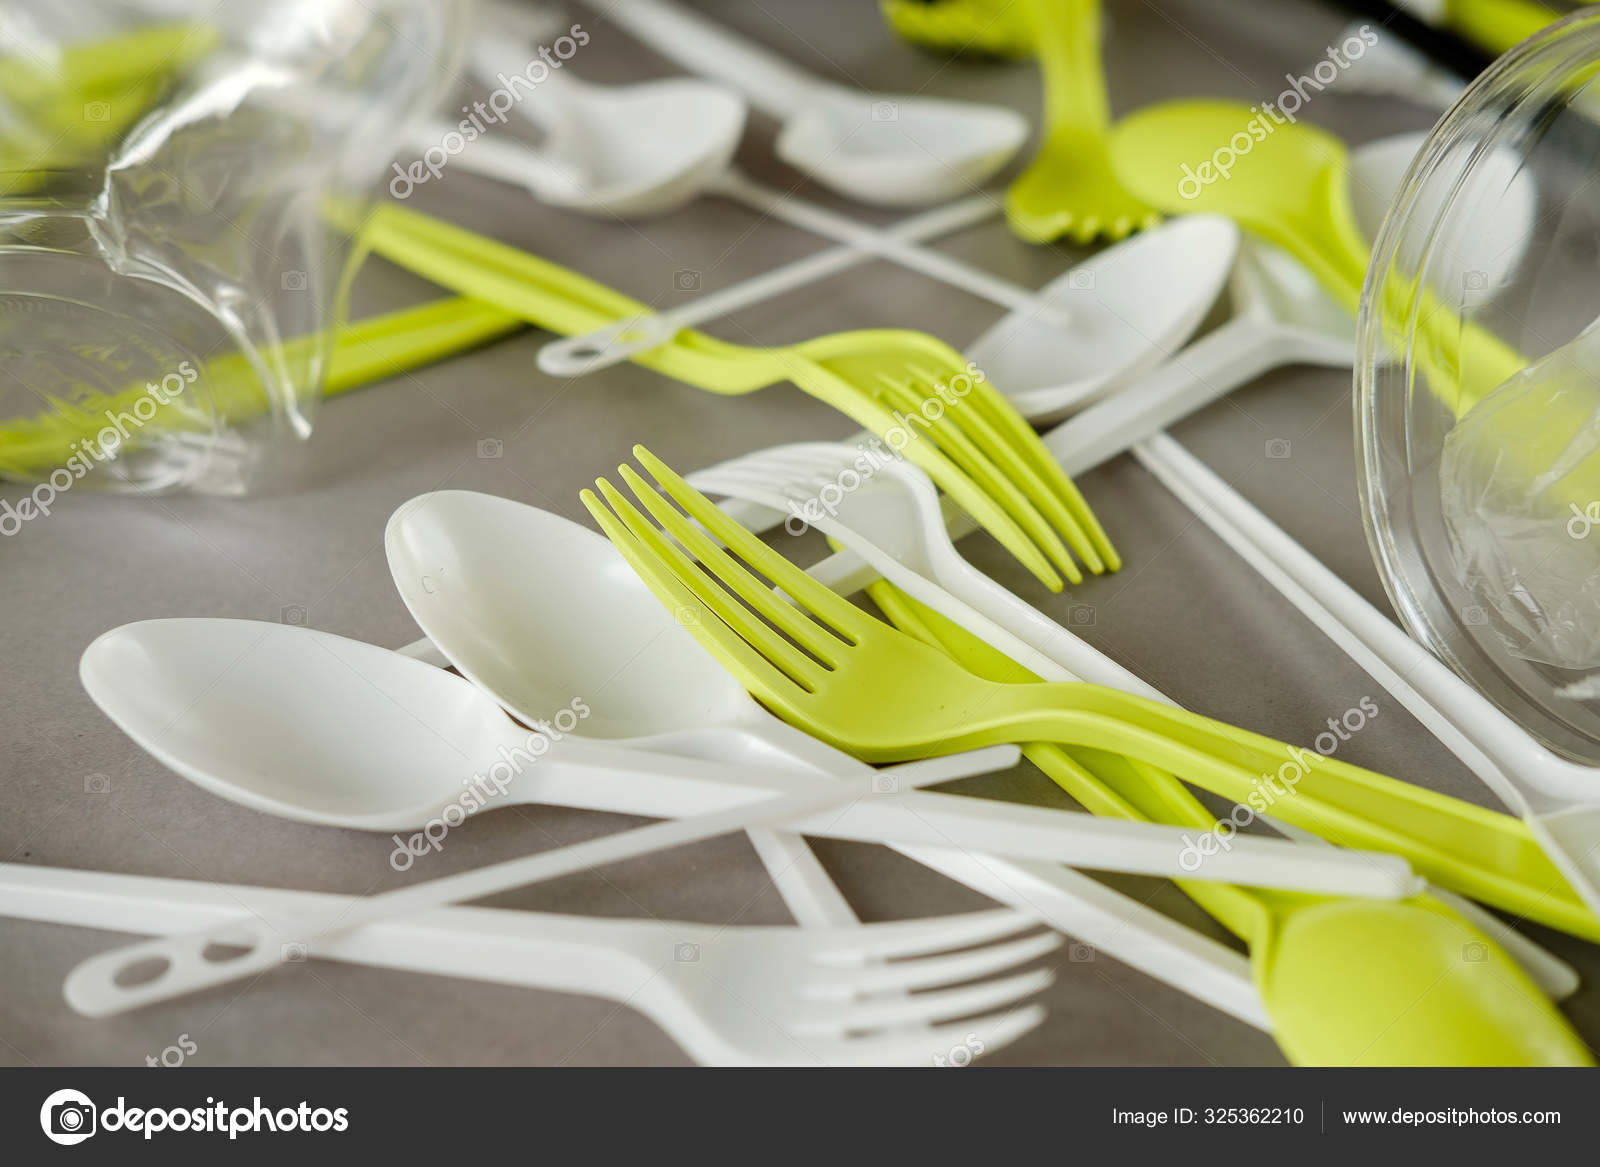 https://st3.depositphotos.com/7699512/32536/i/1600/depositphotos_325362210-stock-photo-plastic-spoons-forks-cups-single.jpg